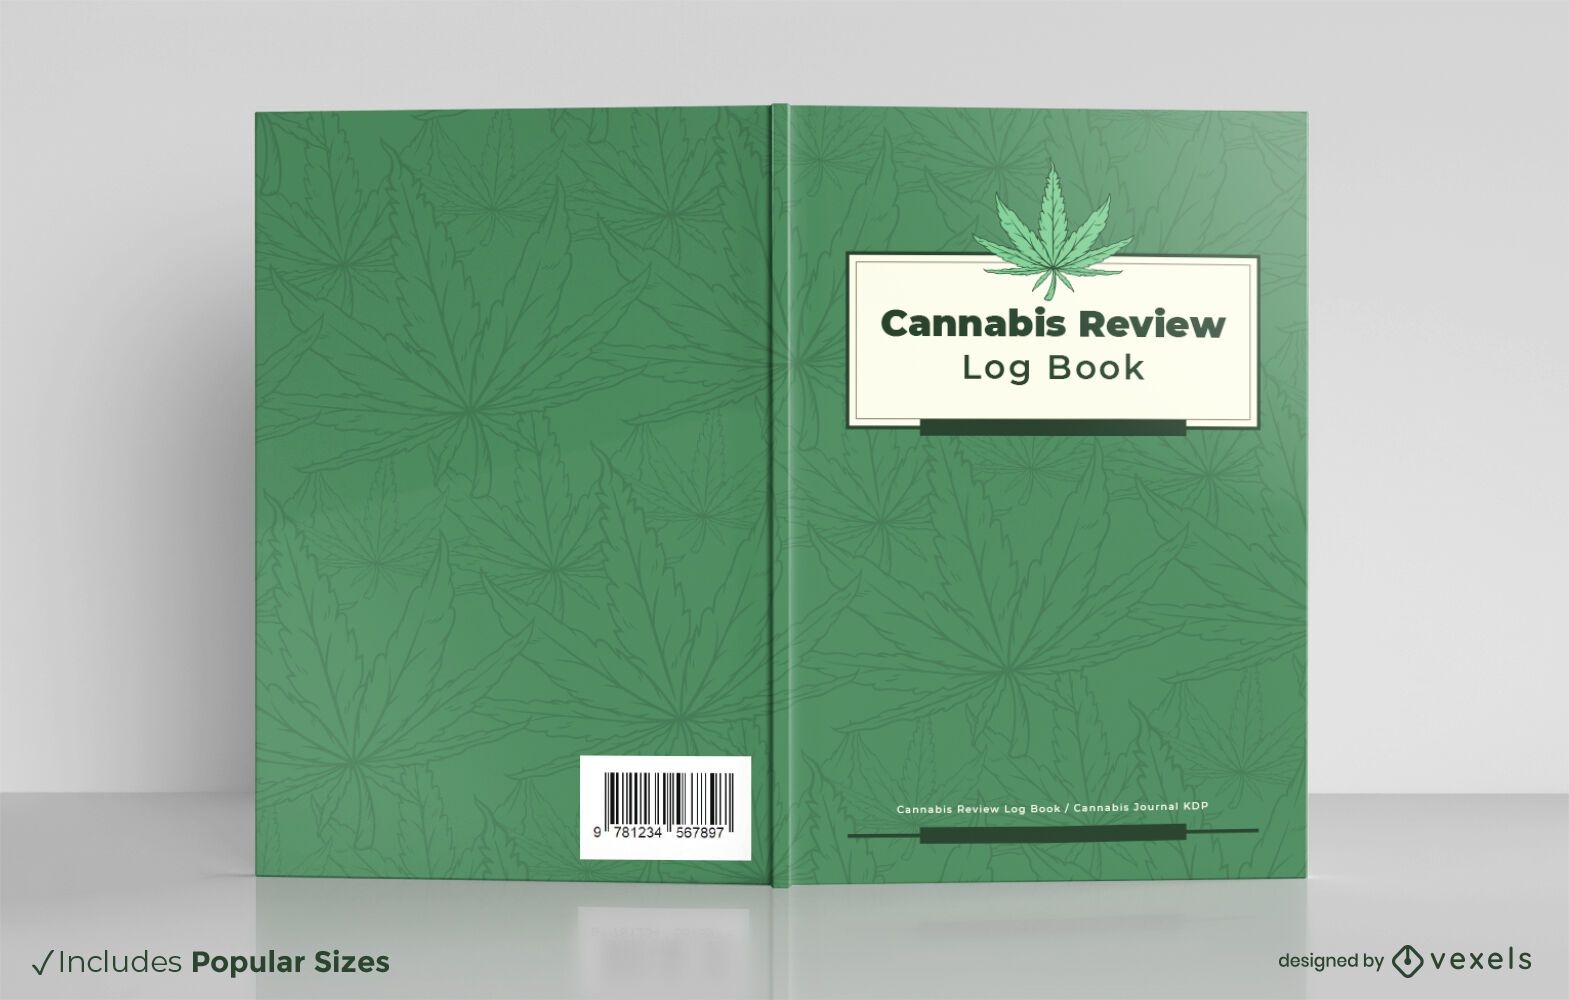 Cannabis review log book cover design